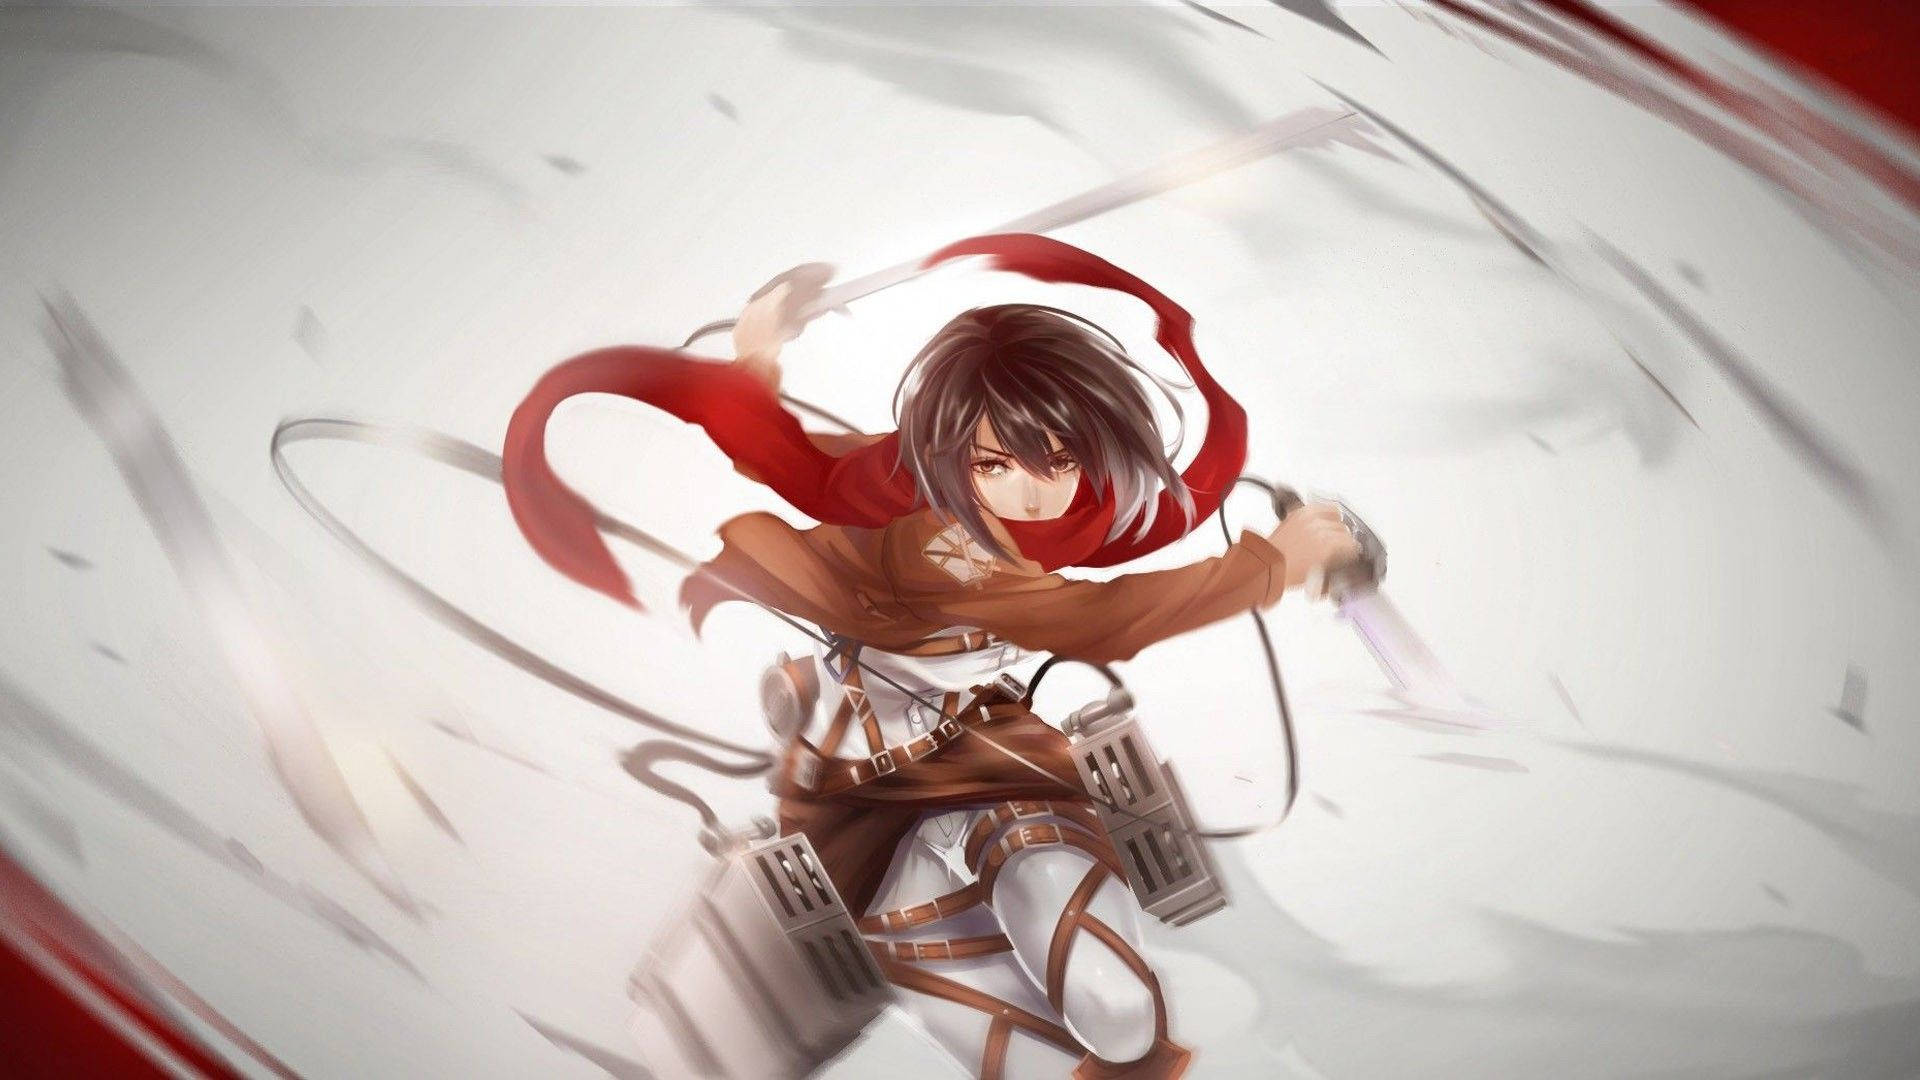 Mikasa Ackerman Swinging Her Swords